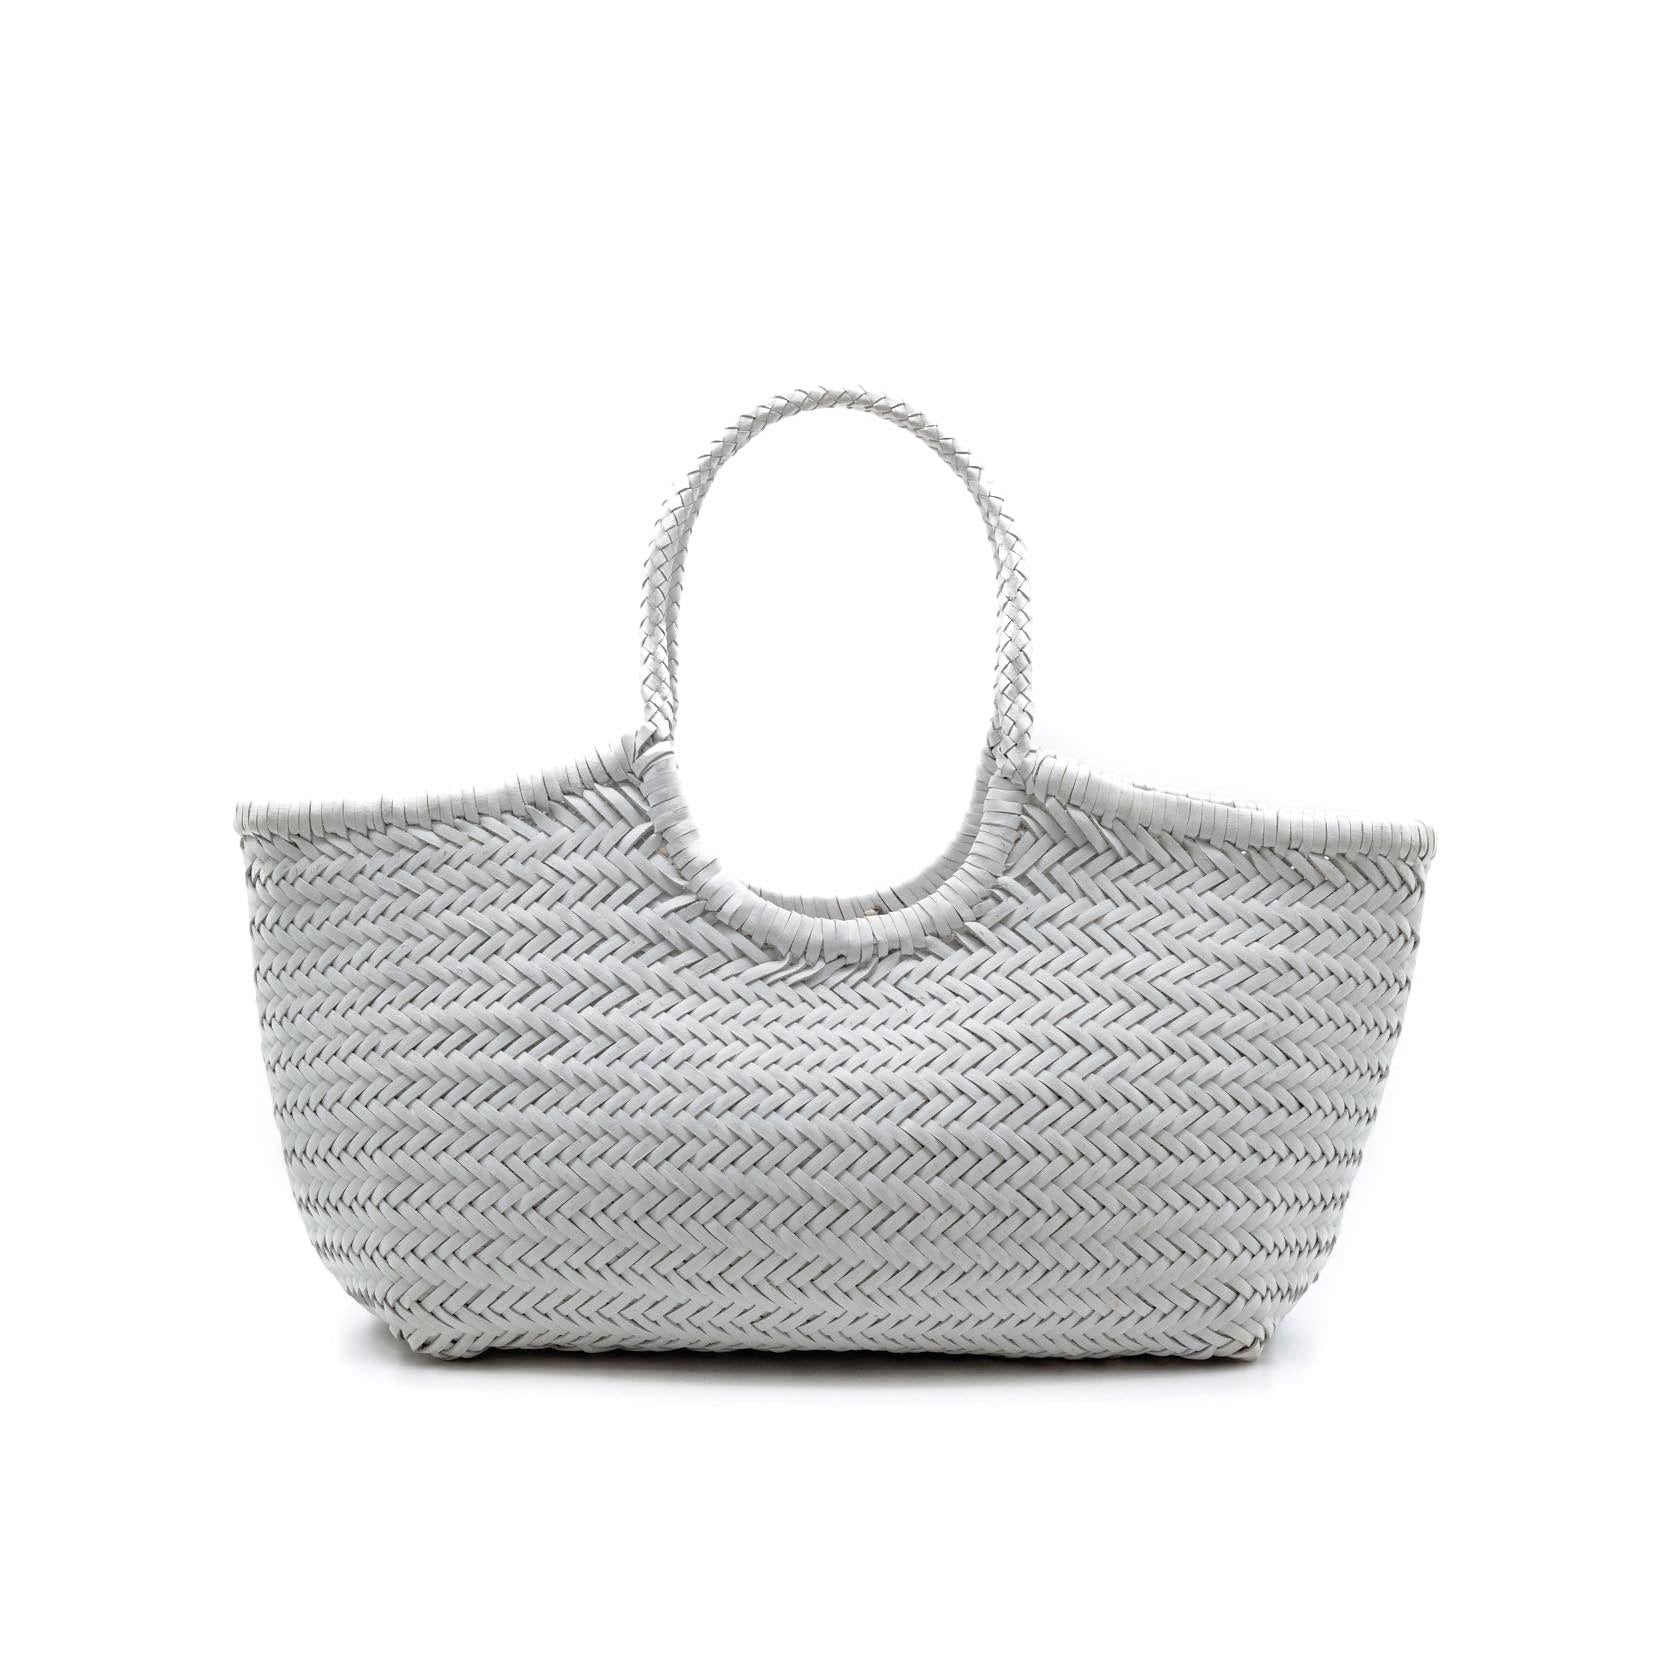 Dragon Diffusion - White woven leather bag